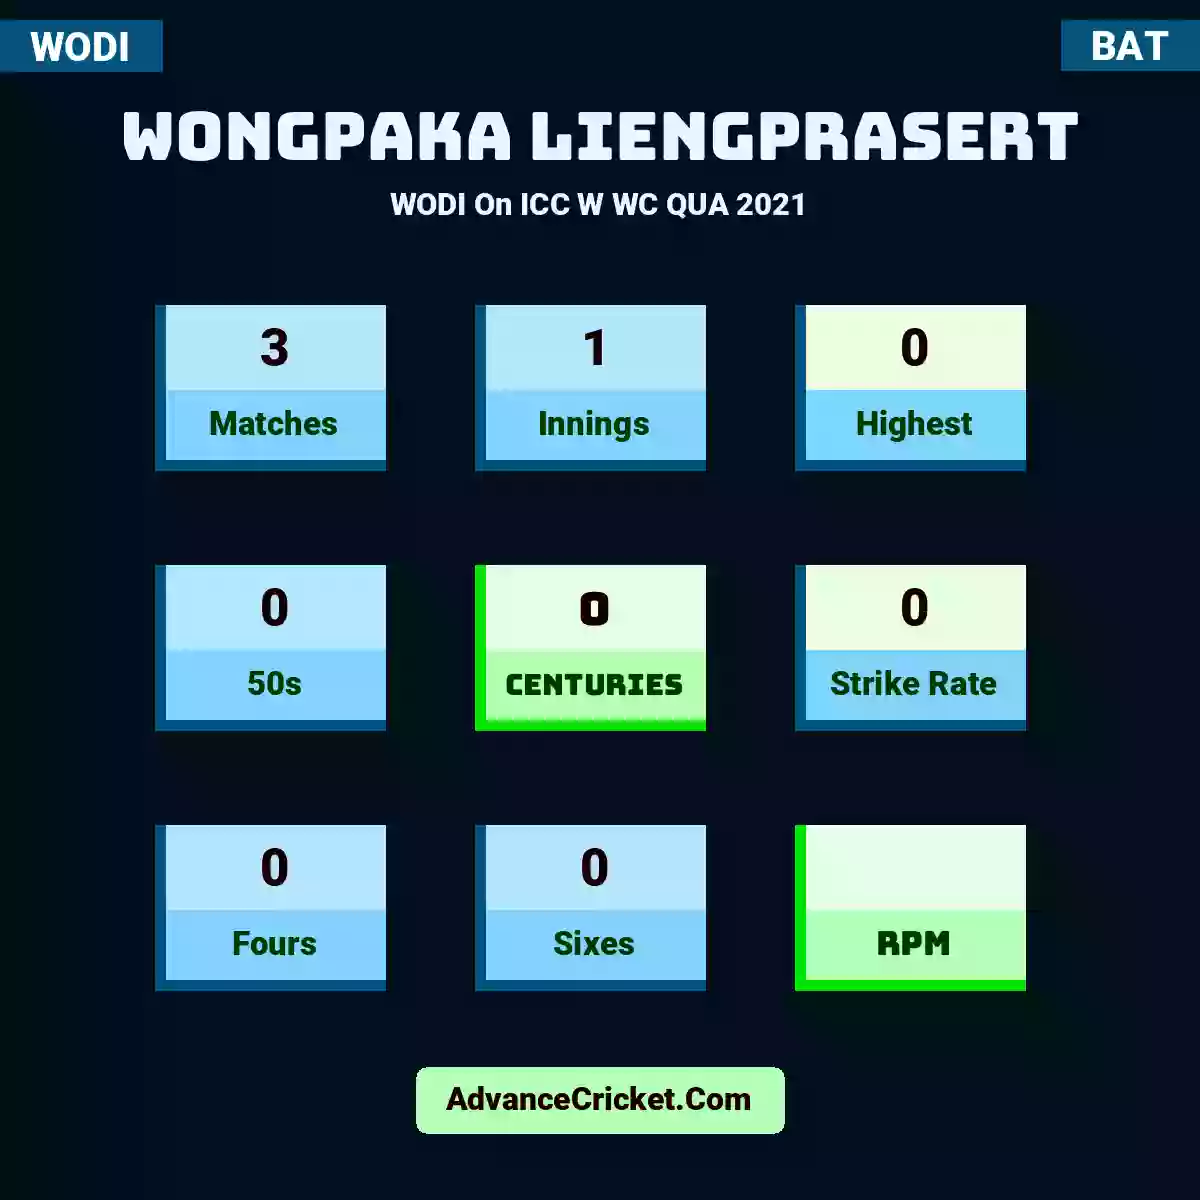 Wongpaka Liengprasert WODI  On ICC W WC QUA 2021, Wongpaka Liengprasert played 3 matches, scored 0 runs as highest, 0 half-centuries, and 0 centuries, with a strike rate of 0. W.Liengprasert hit 0 fours and 0 sixes.